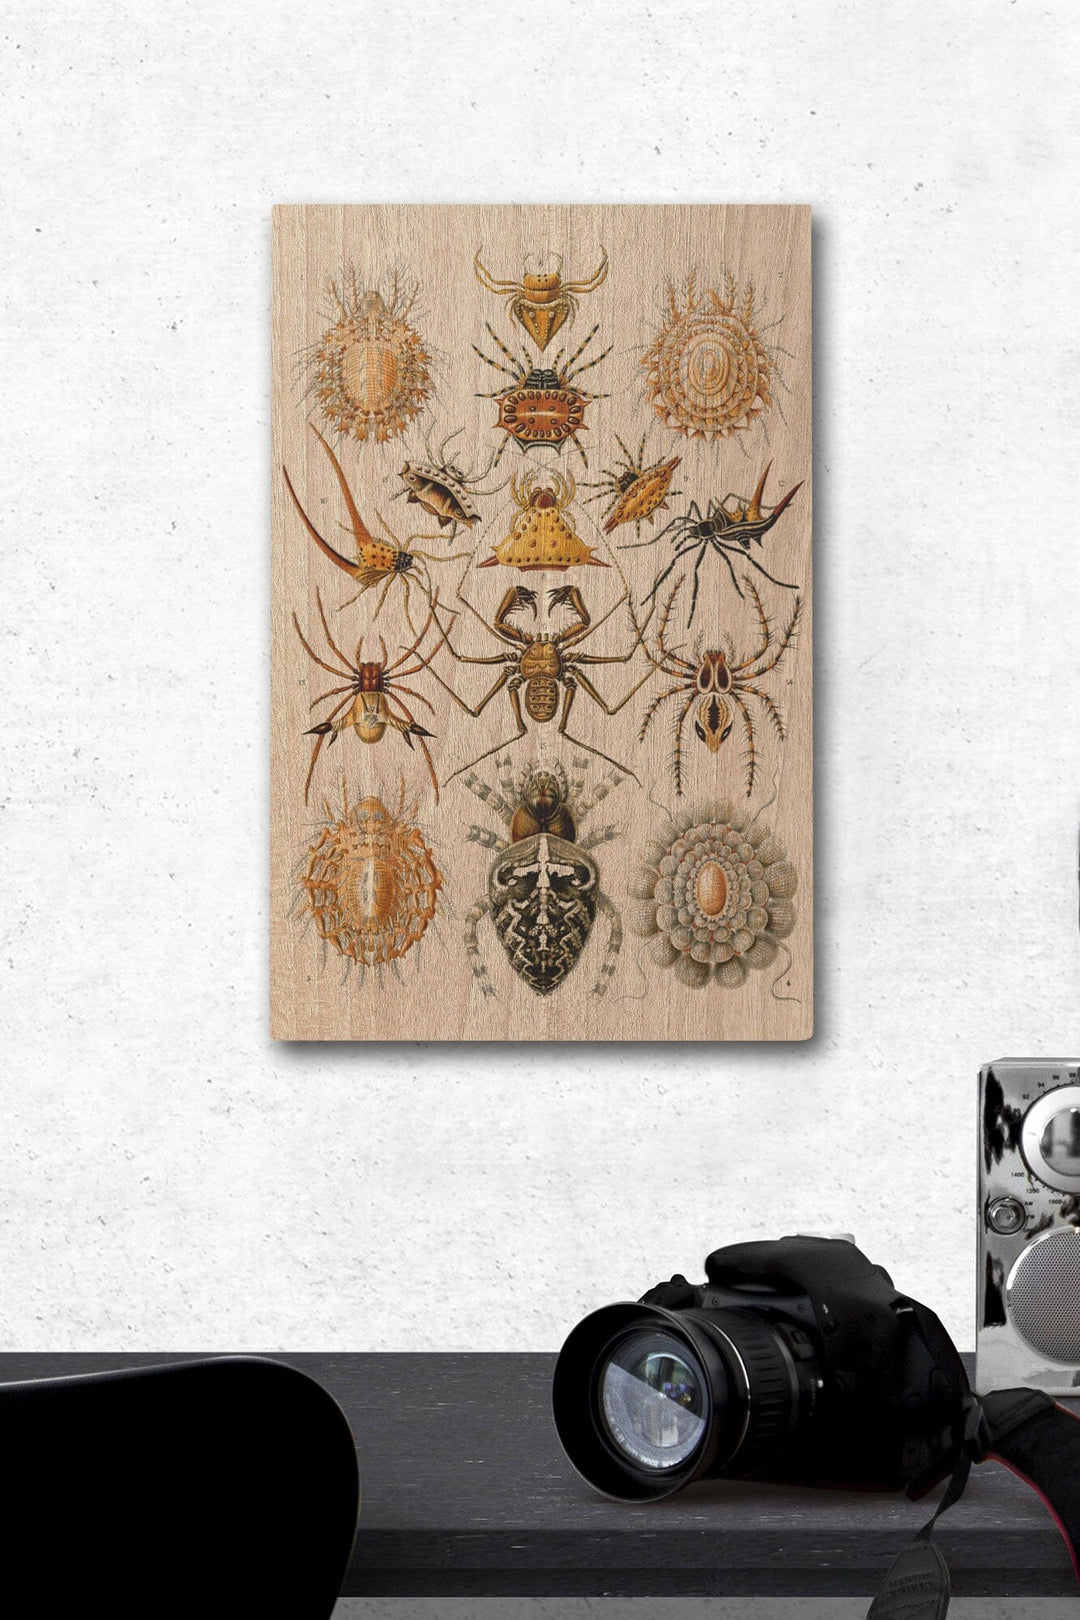 Art Forms of Nature, Arachnida (Spiders), Ernst Haeckel Artwork, Wood Signs and Postcards Wood Lantern Press 12 x 18 Wood Gallery Print 